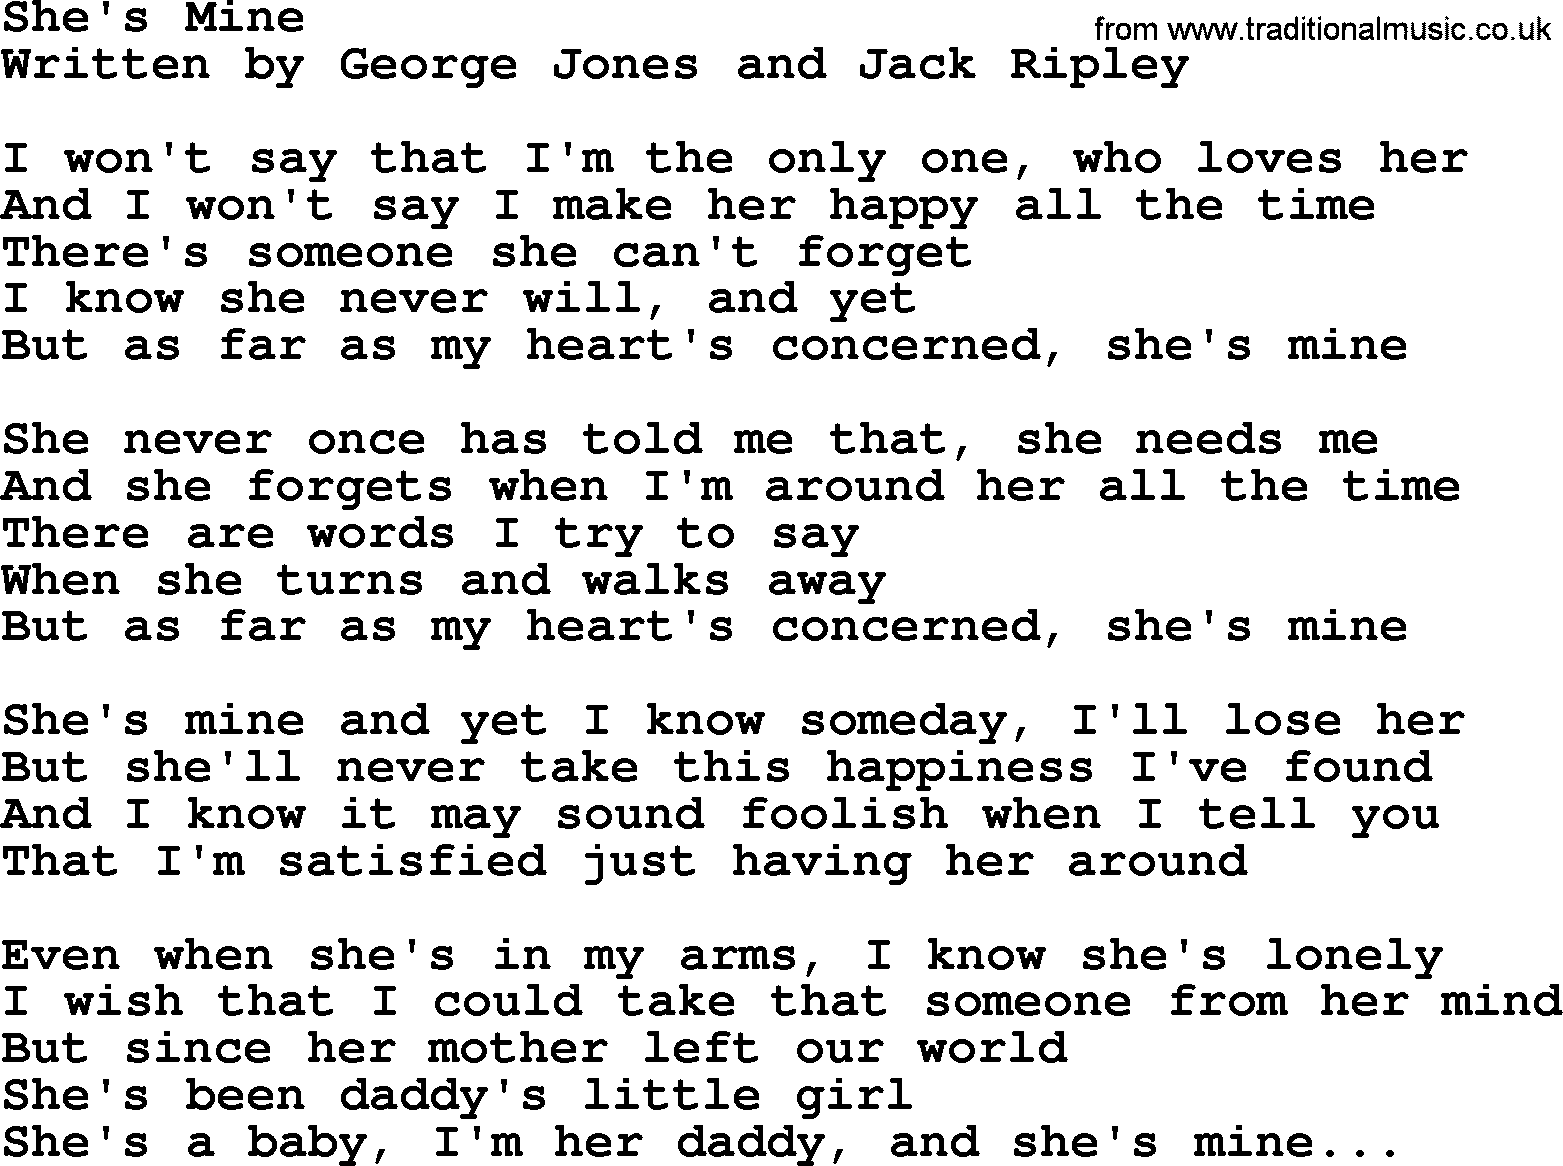 George Jones song: She's Mine, lyrics